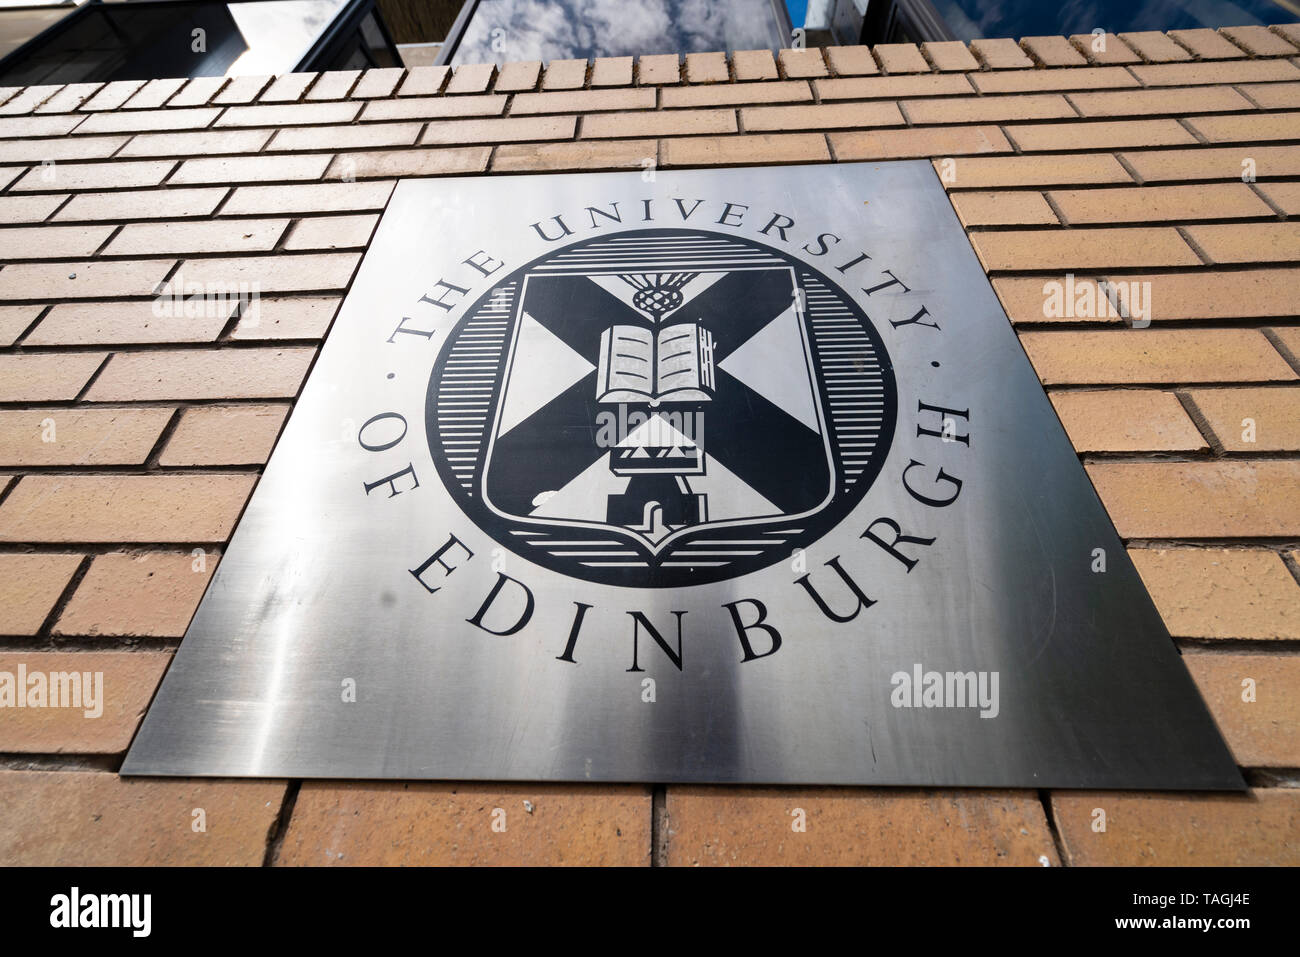 Campus at University of Edinburgh in Old Town , Scotland, UK Stock Photo